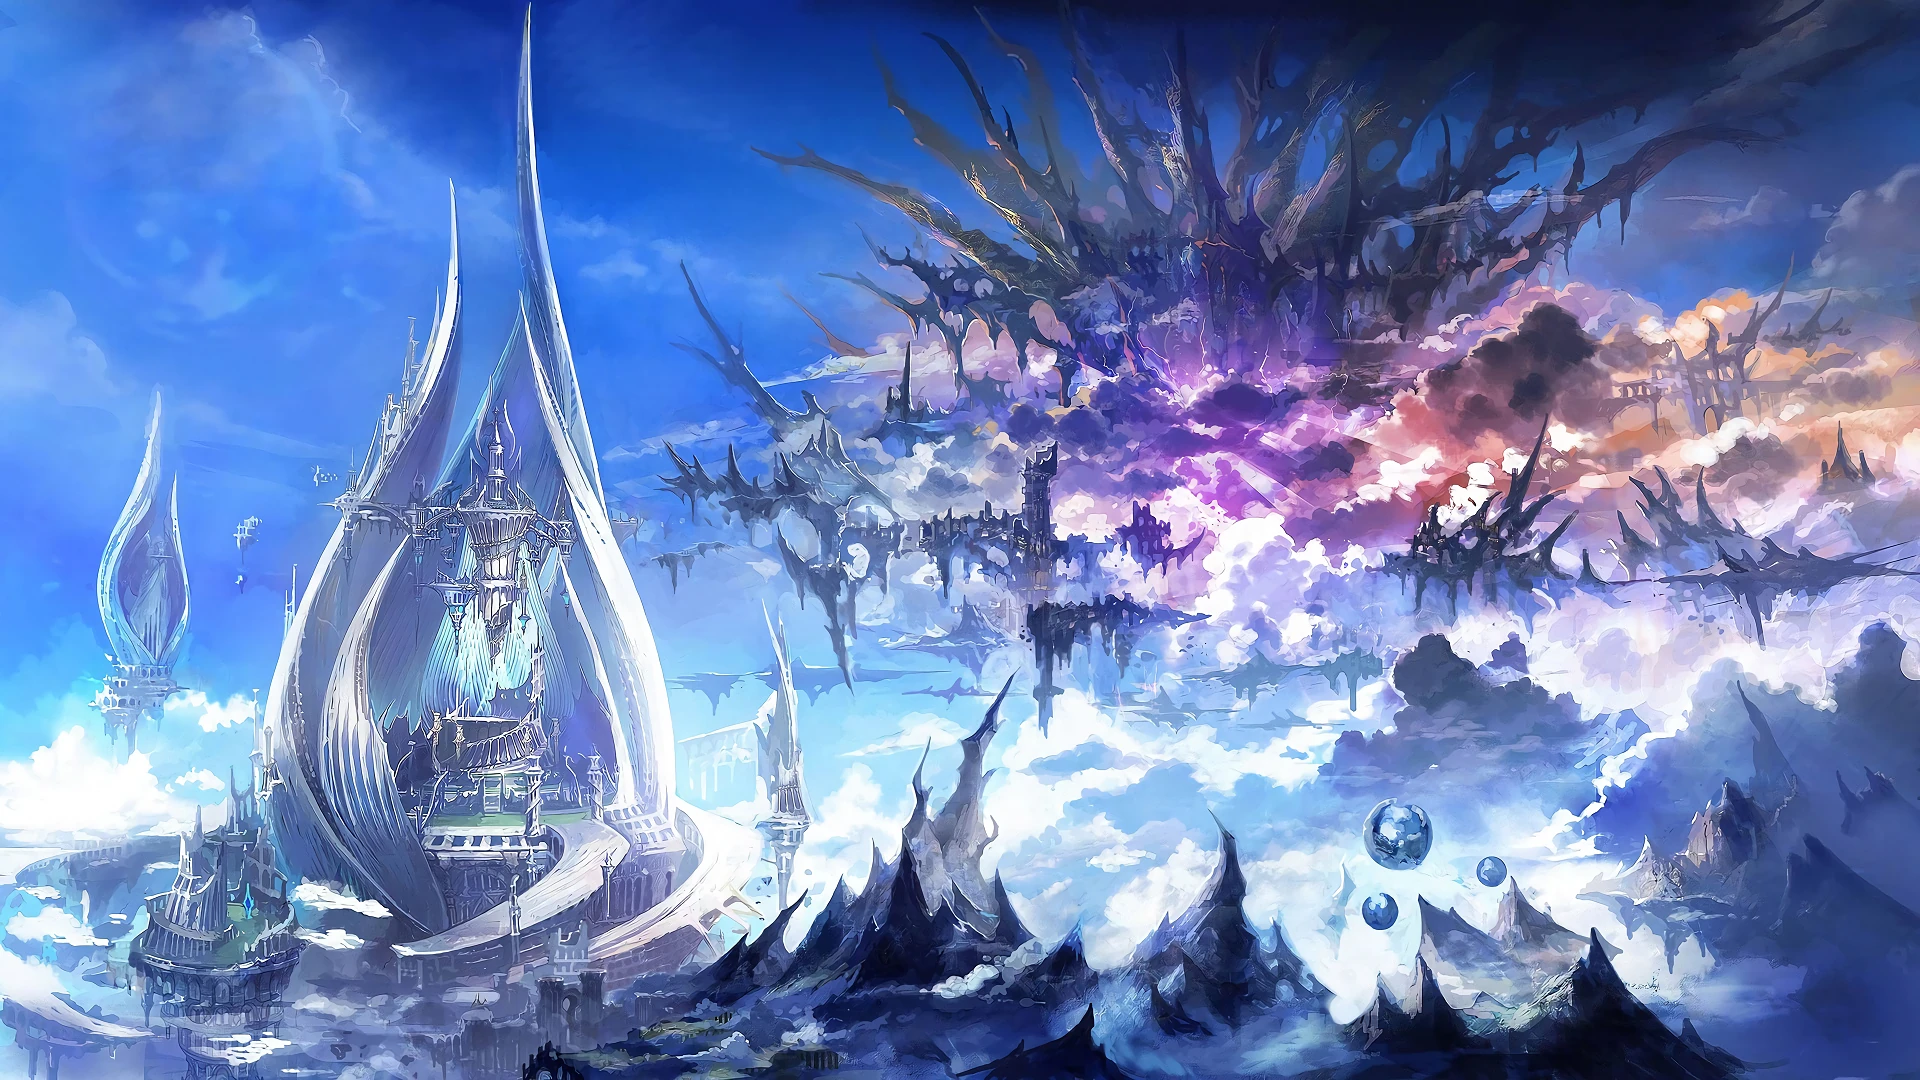 Wallpaper de Final Fantasy XIV - A Realm Reborn - 24-10